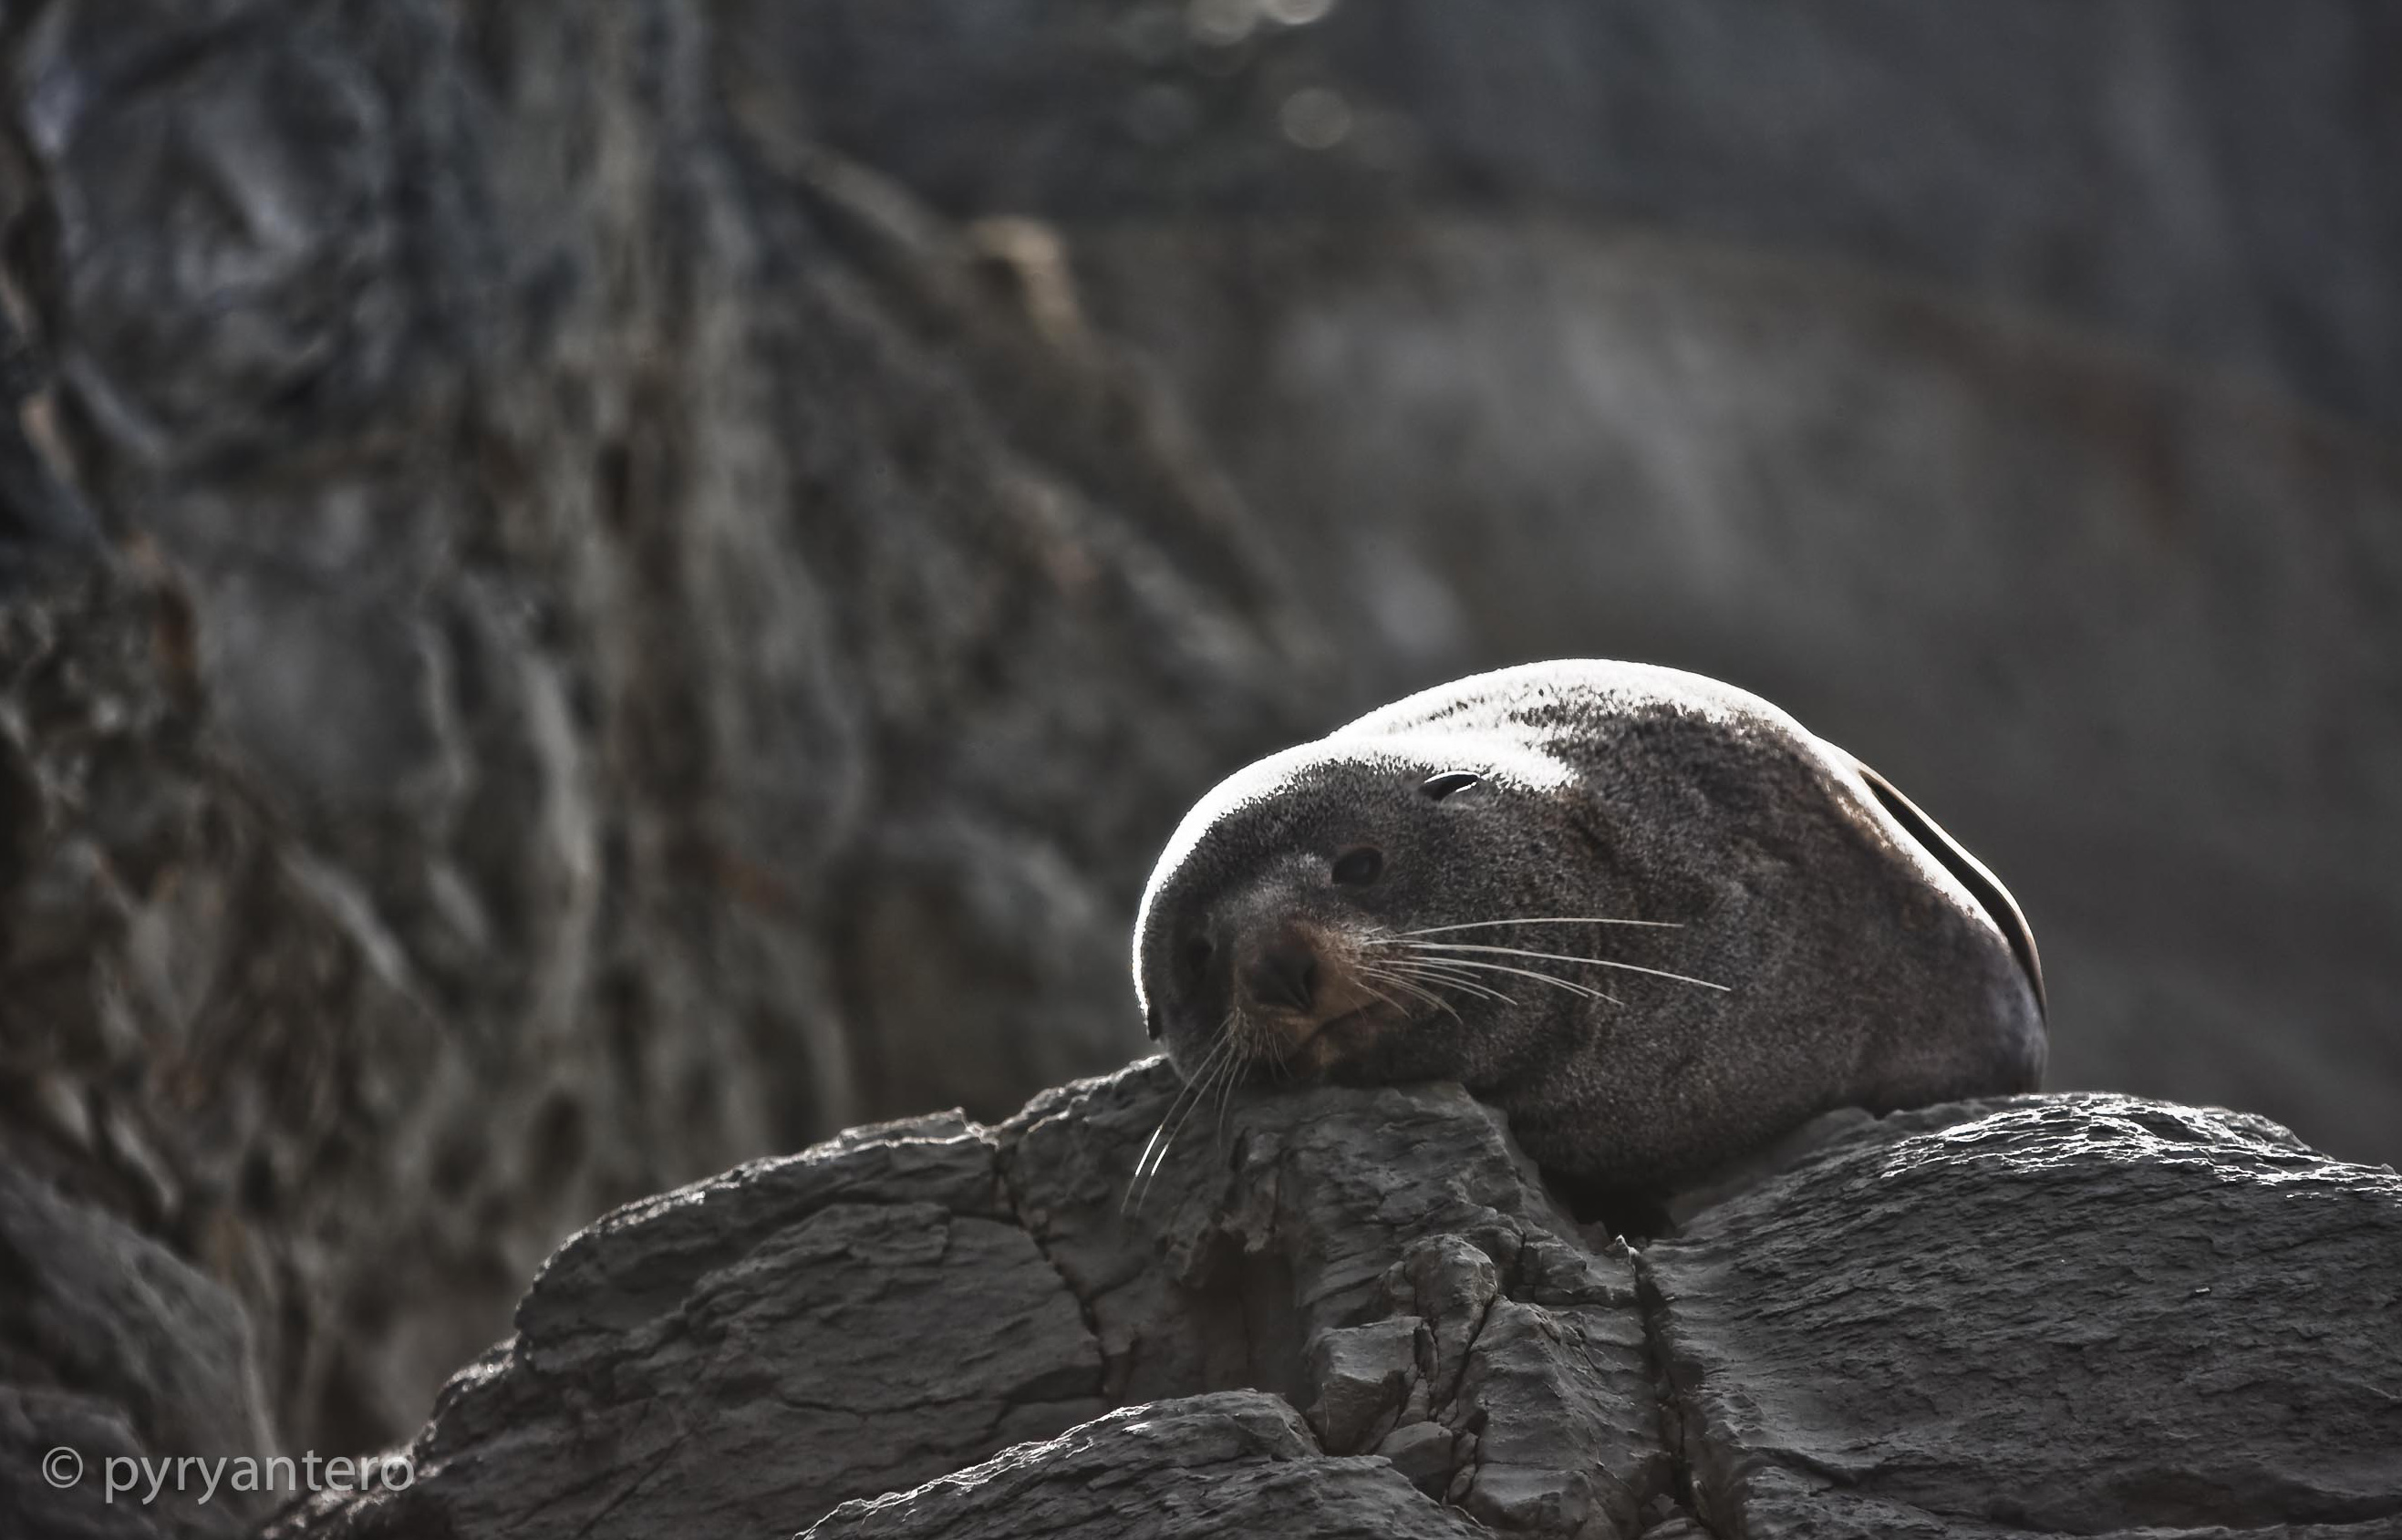 Seal sunbathing, Seal colony, Kaikoura, South Island, New Zealand. Pyry Antero Pietiläinen Photography, pyryantero